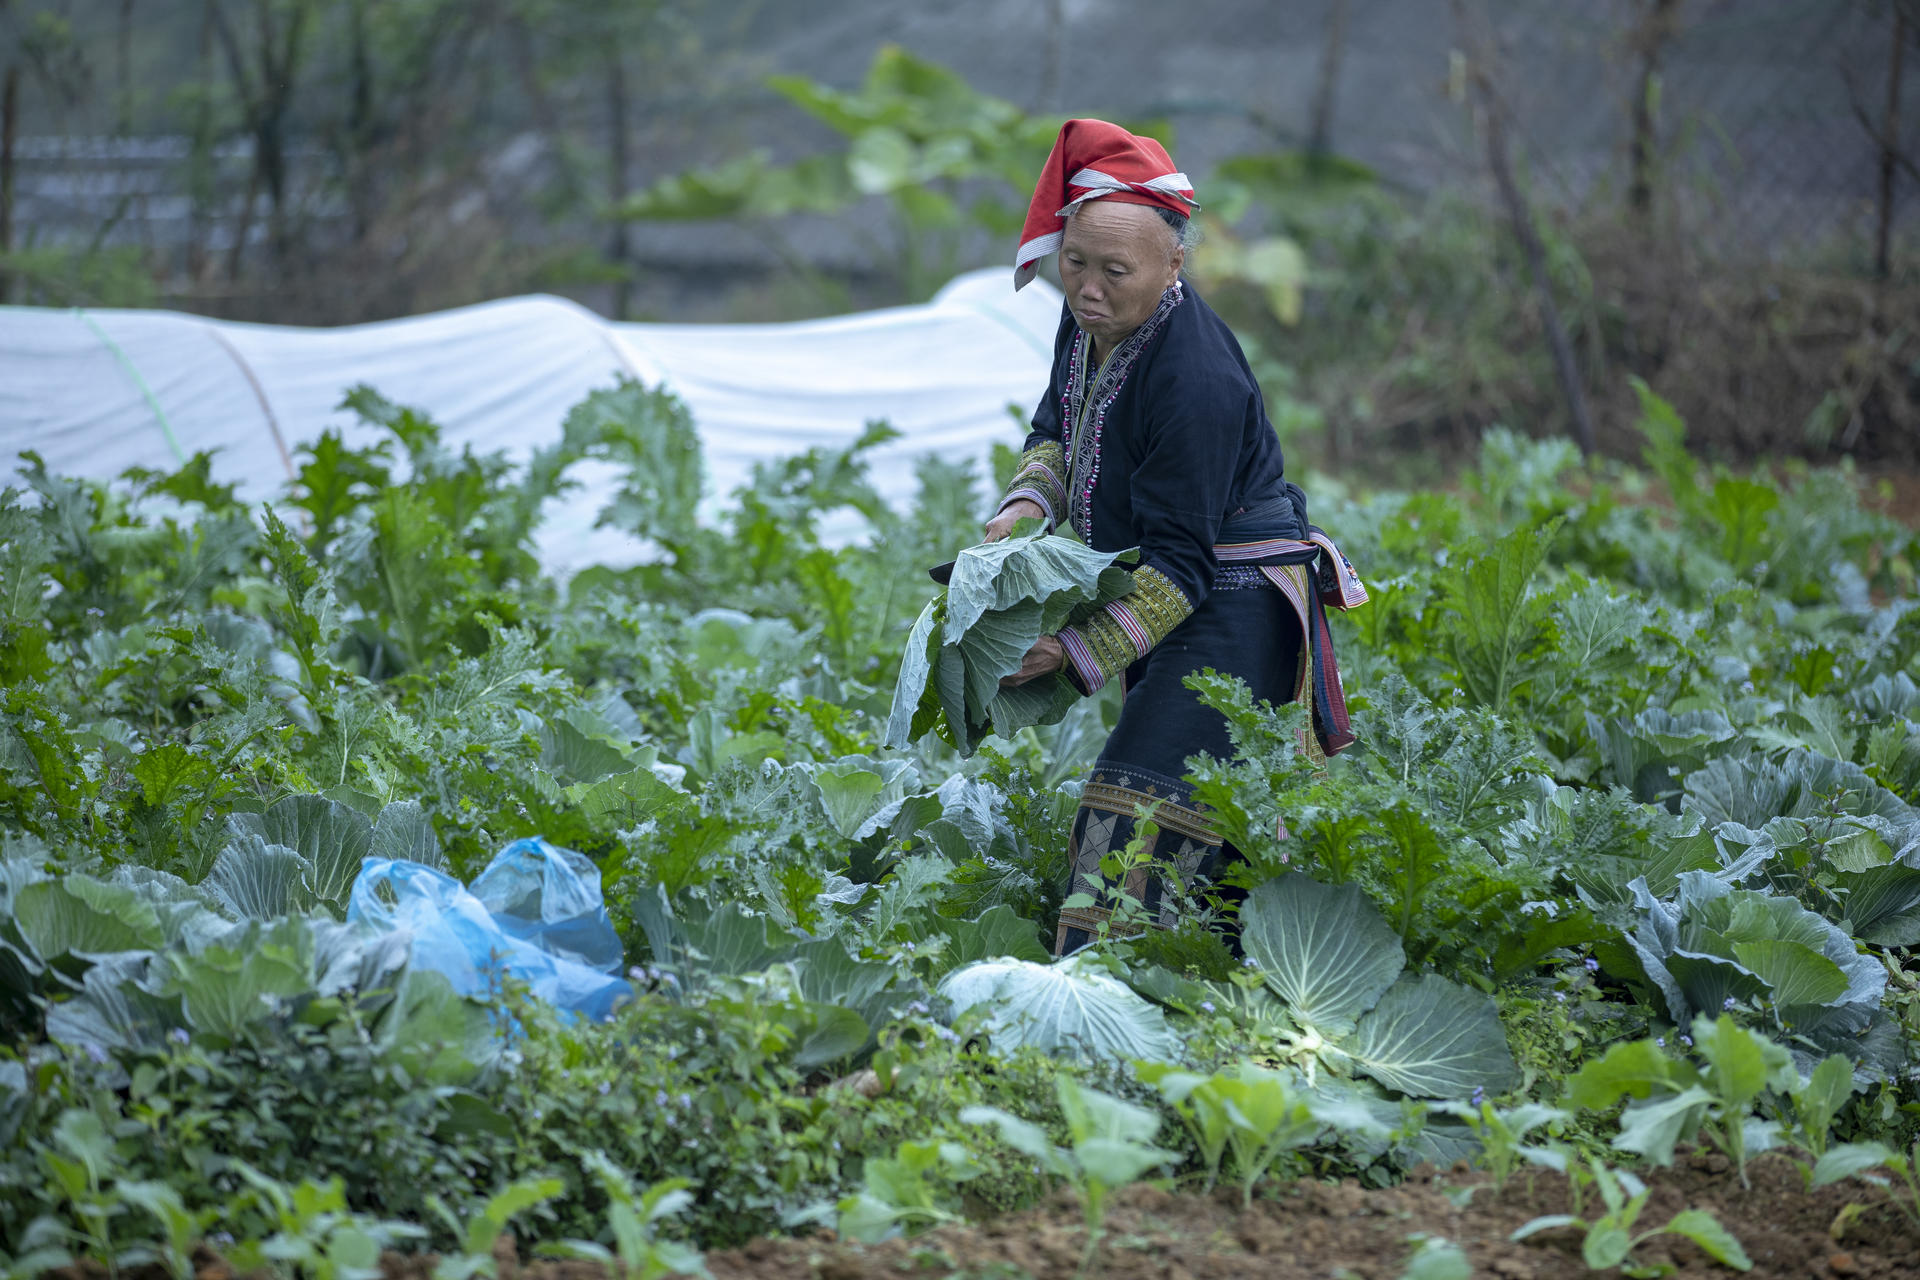 Hmong woman harvesting cabbage, Sa Pa, Lao Cai province, Vietnam.